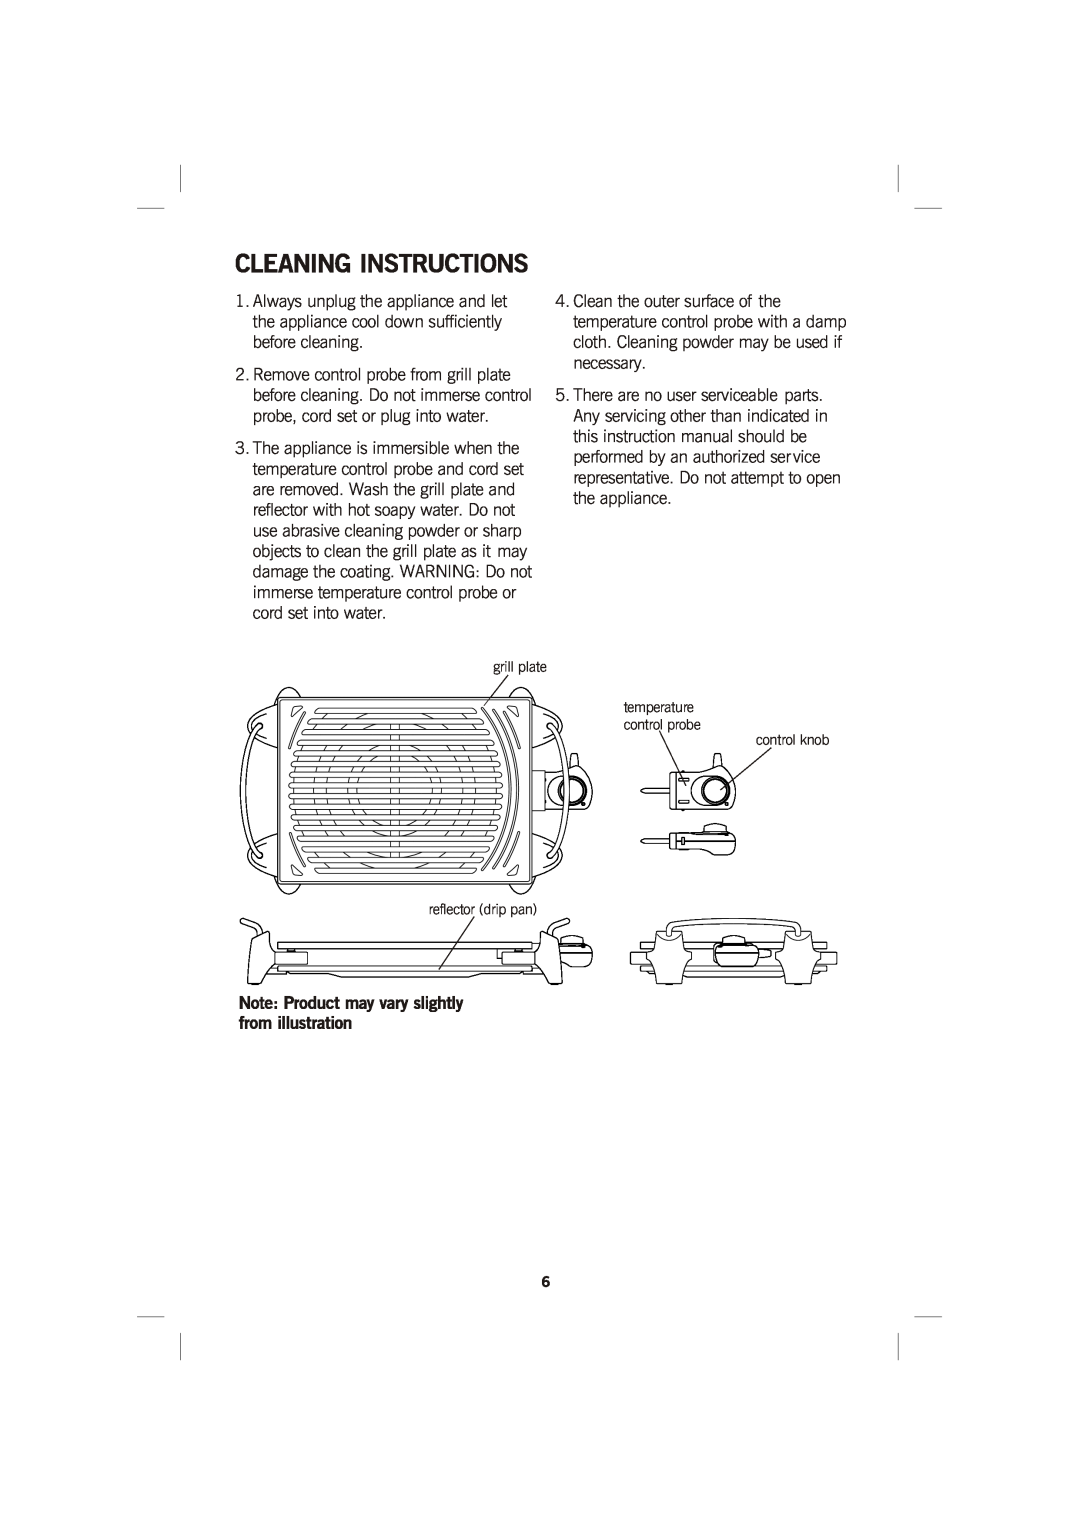 GE 681131690157 manual grill plate temperature control probe control knob reflector drip pan 